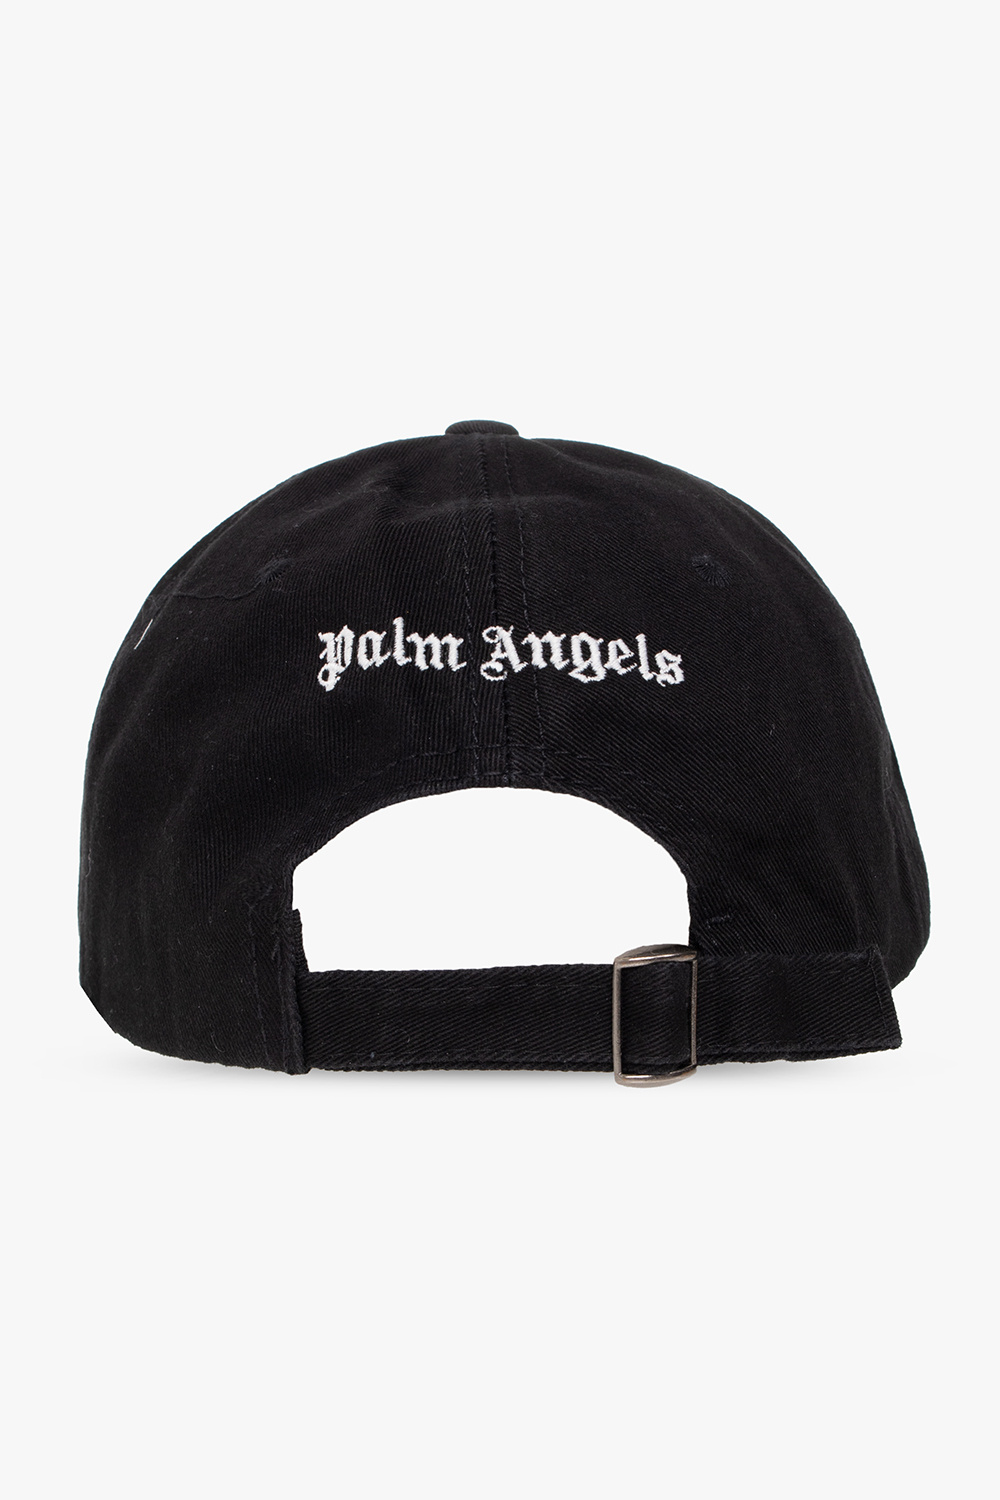 Palm Angels short baseball cap